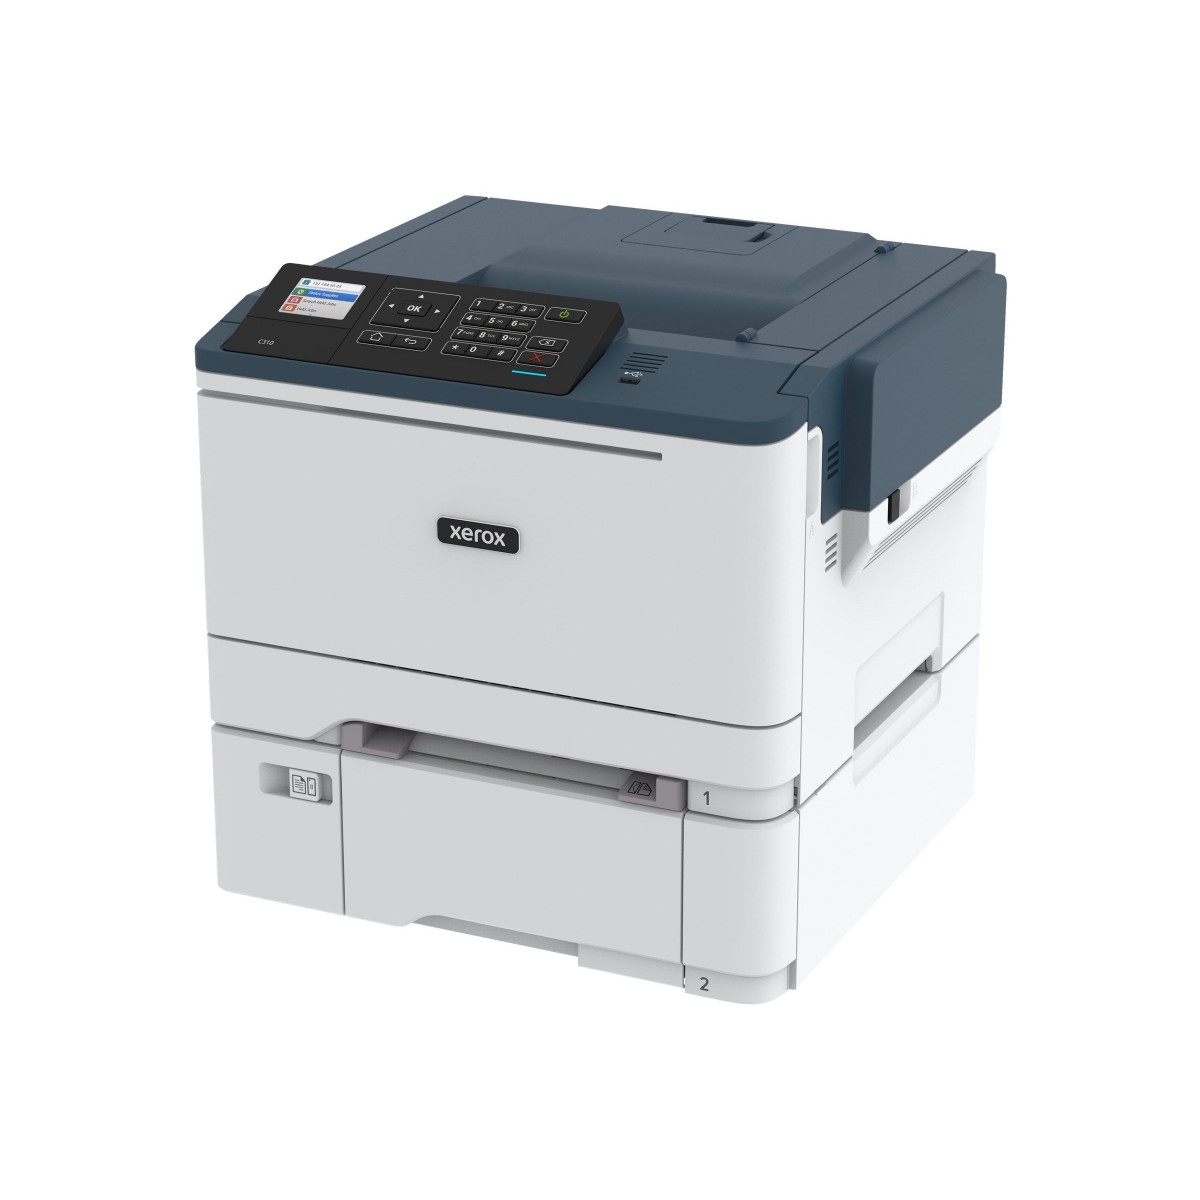 Xerox C310 COLOR PRINTER - Printer